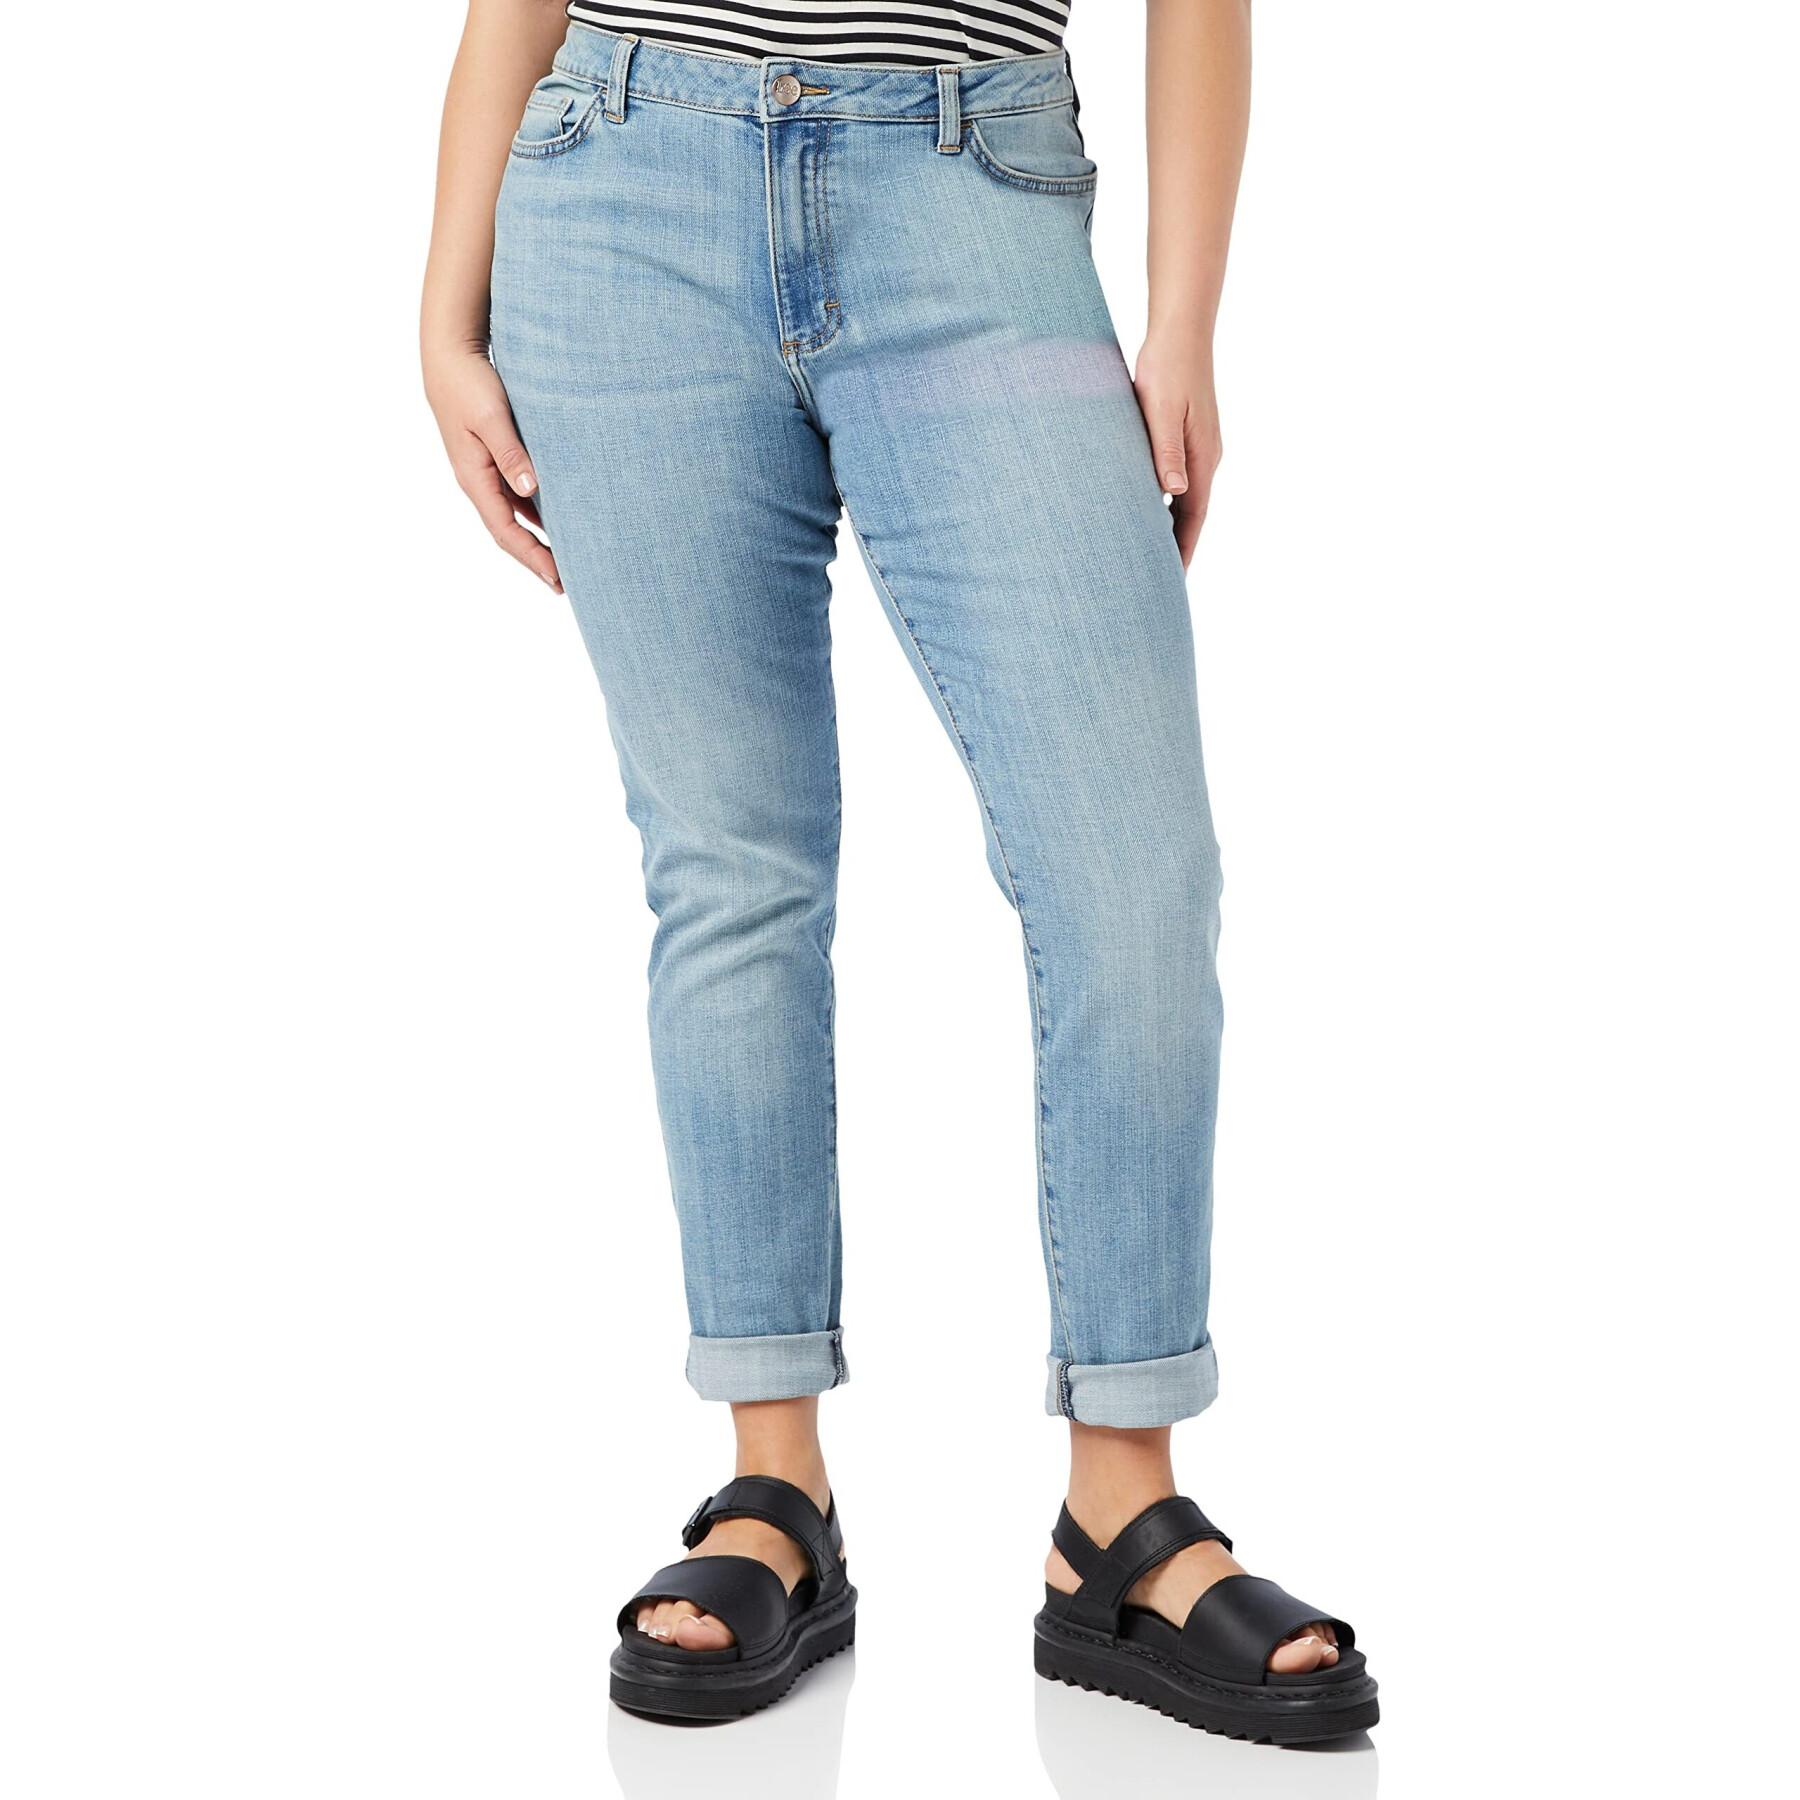 Women's jeans Lee LEGENDARY SKINNY SOLSTICE